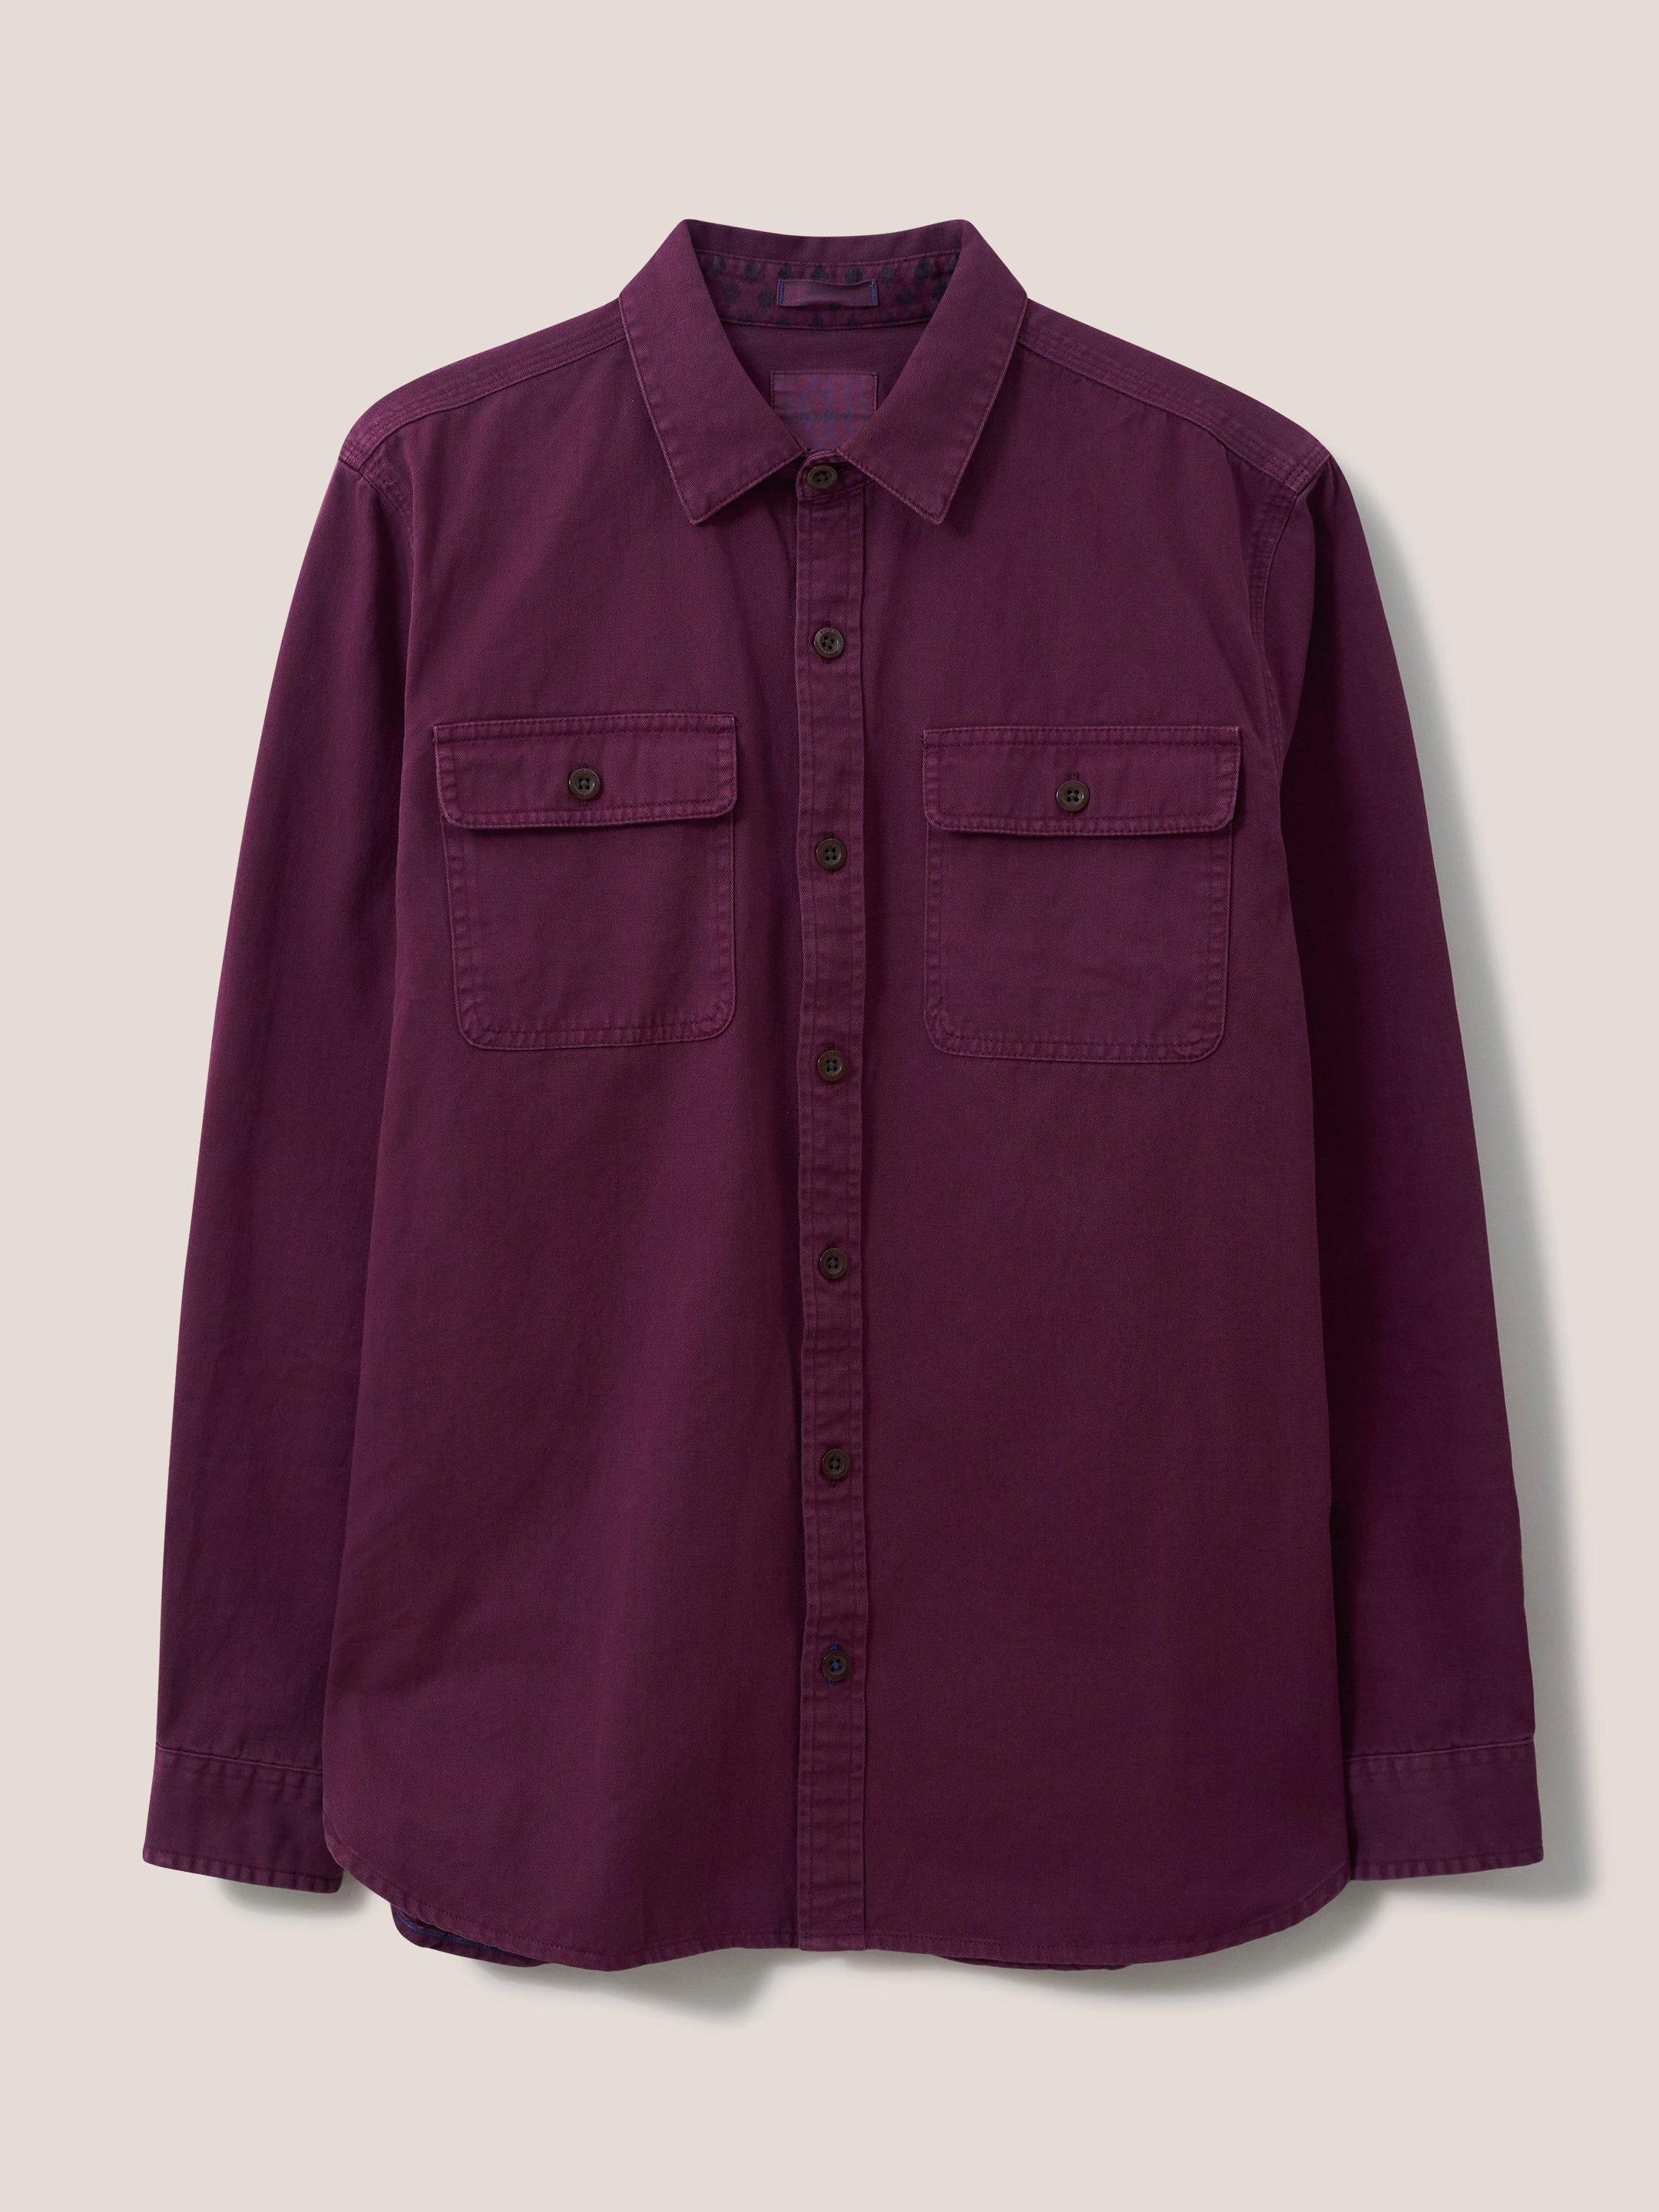 Furze Garment Dye Twill Shirt in MID PLUM - FLAT FRONT